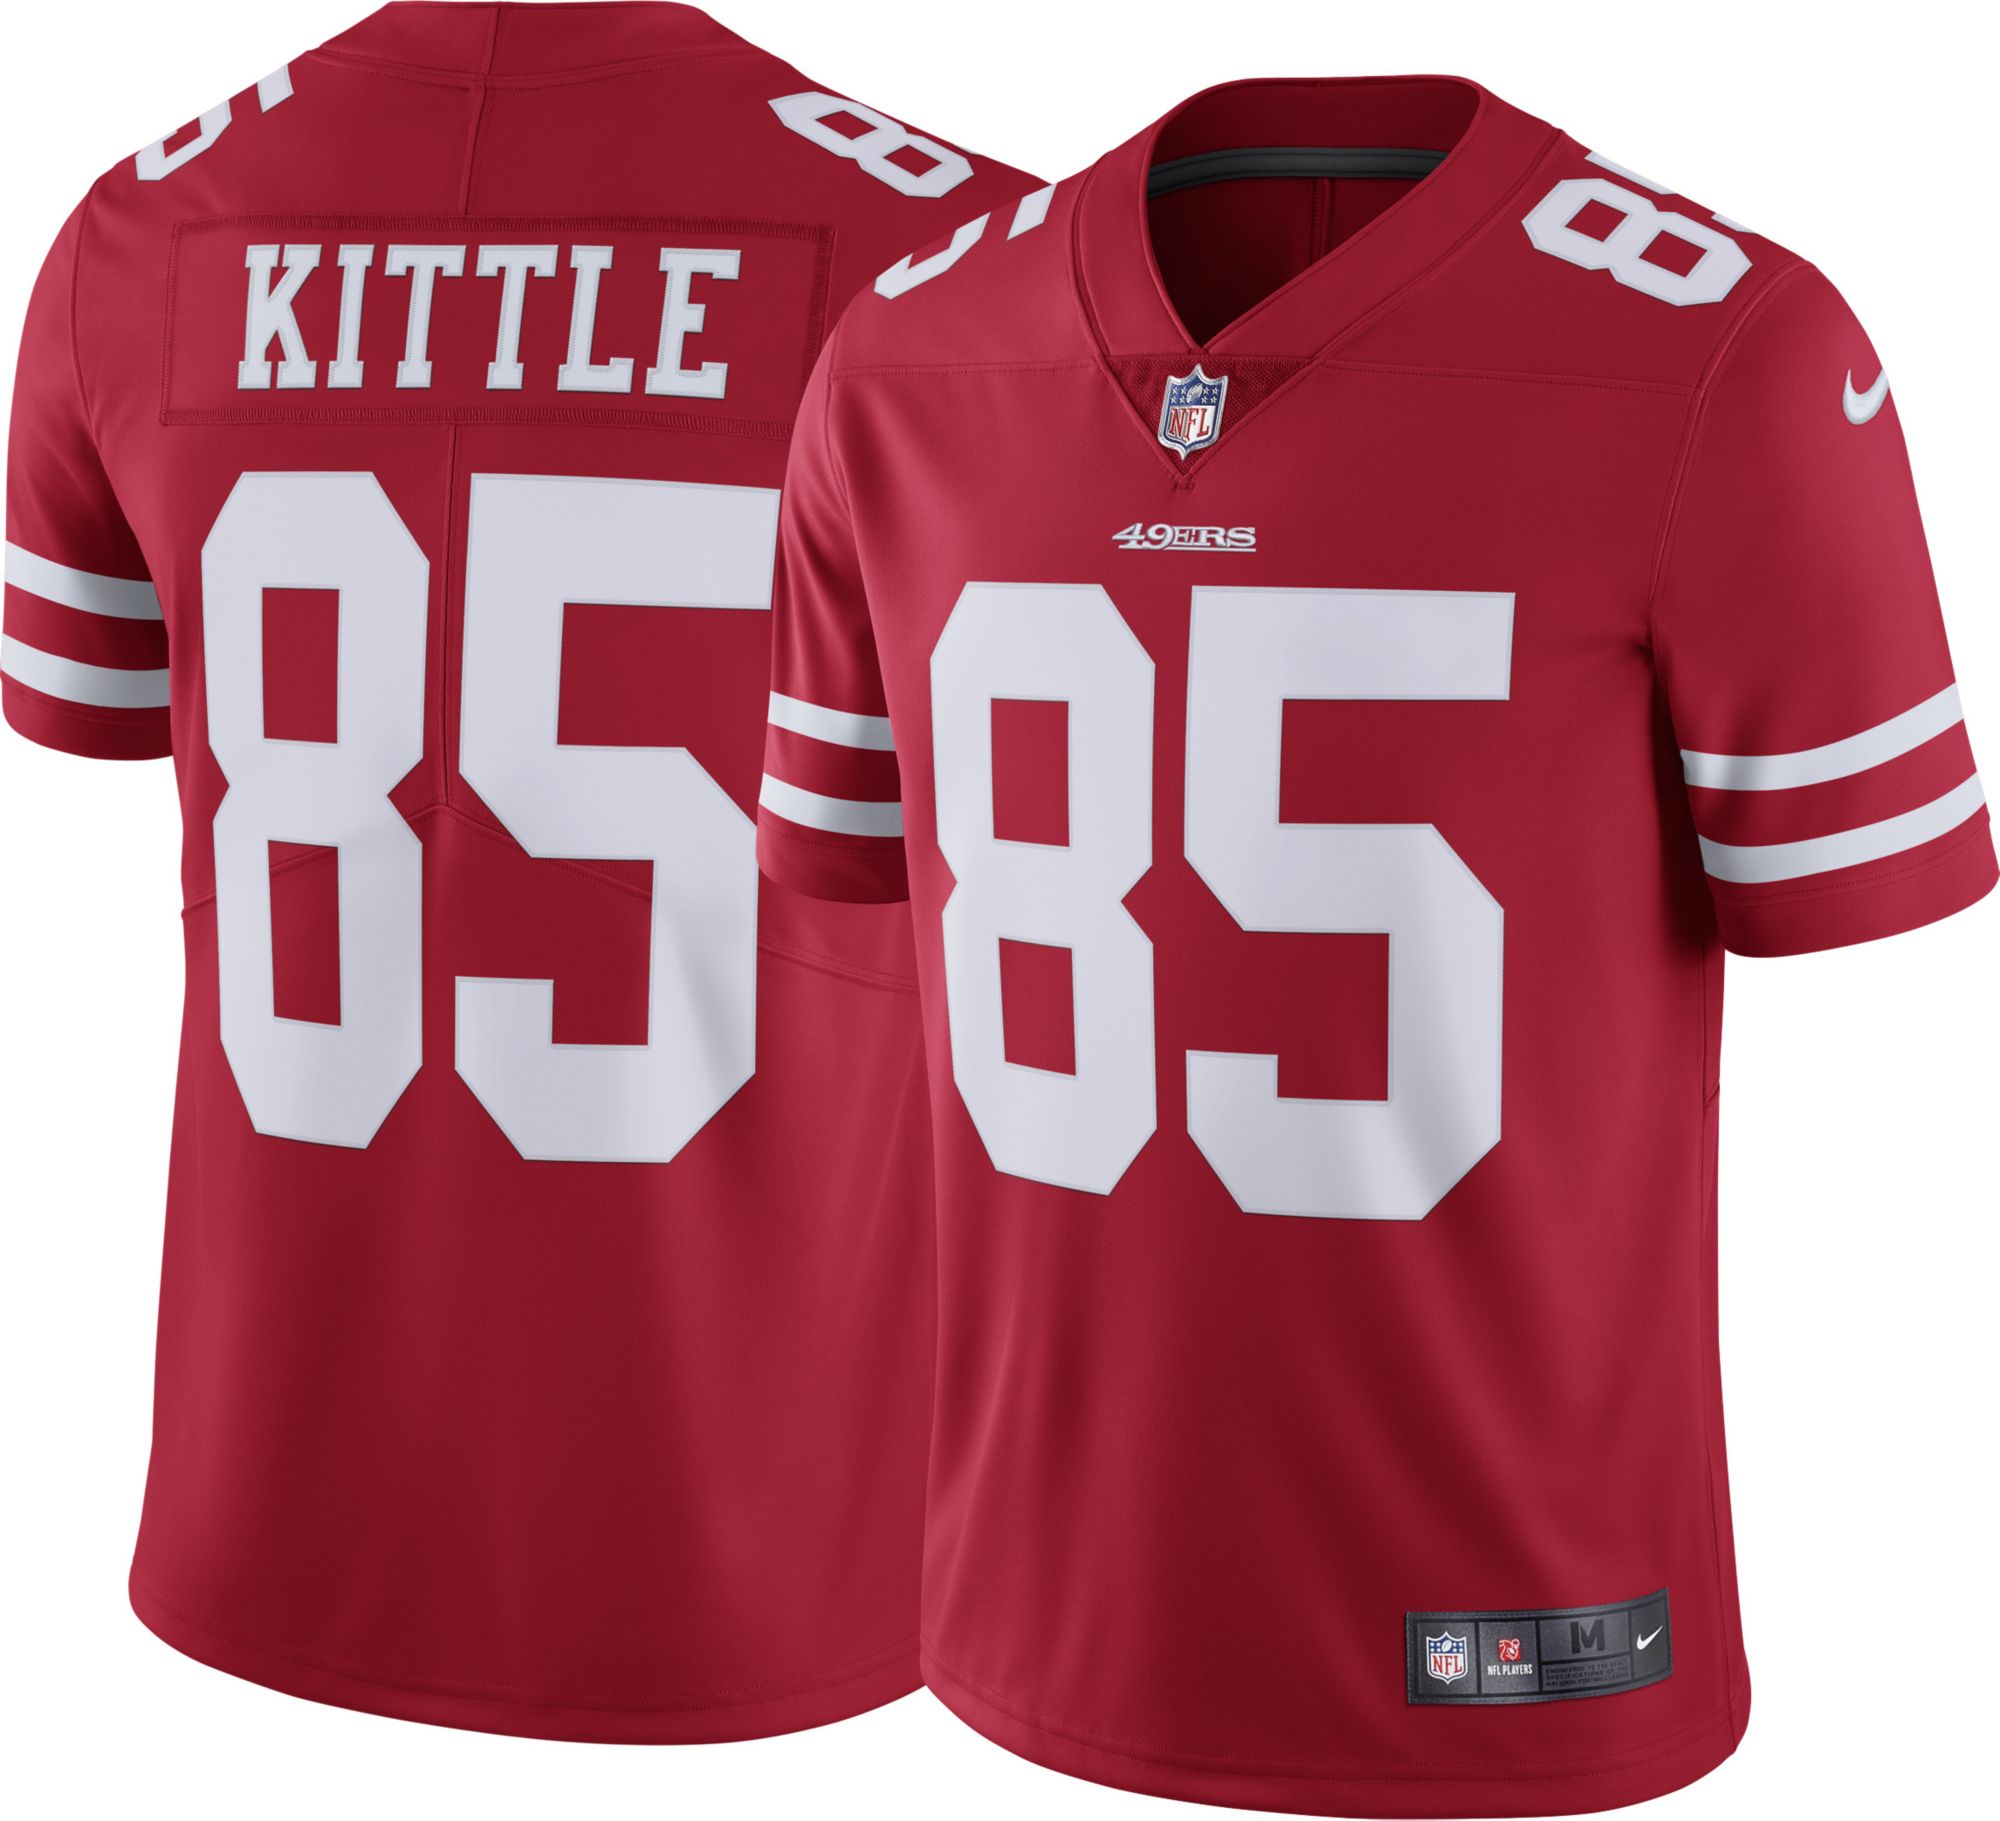 kittle san francisco 49ers jersey